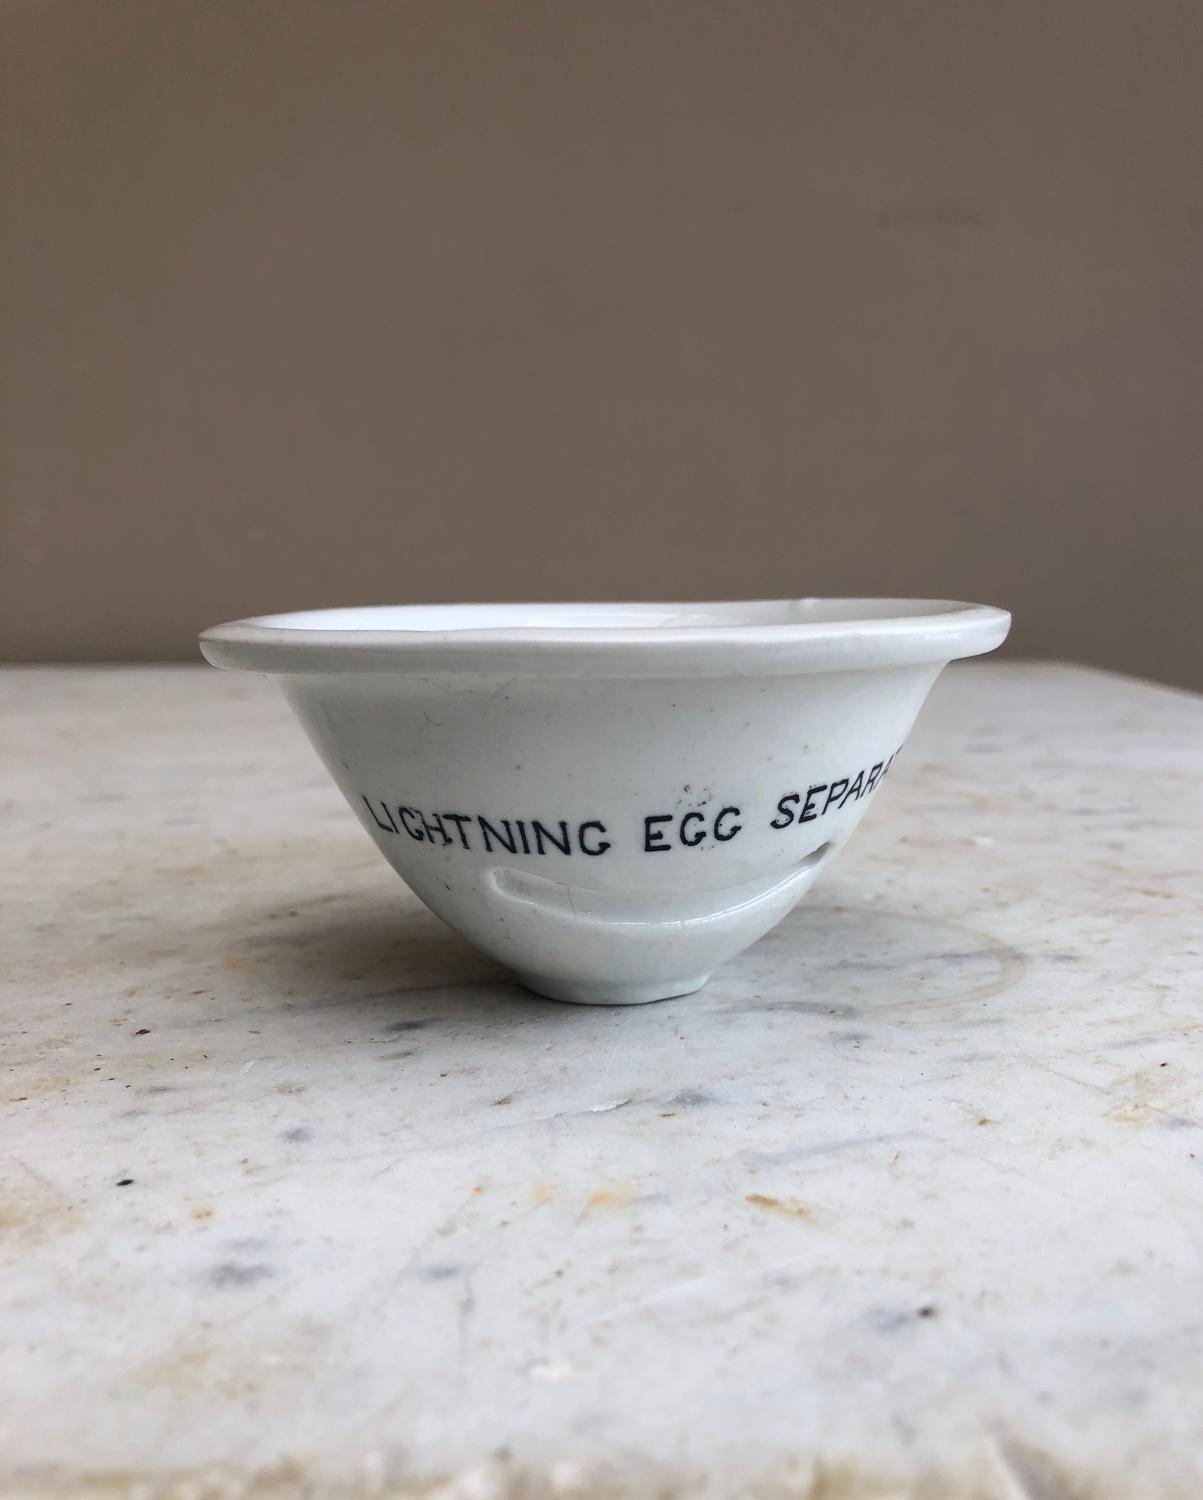 Edwardian Lightning Egg Separator